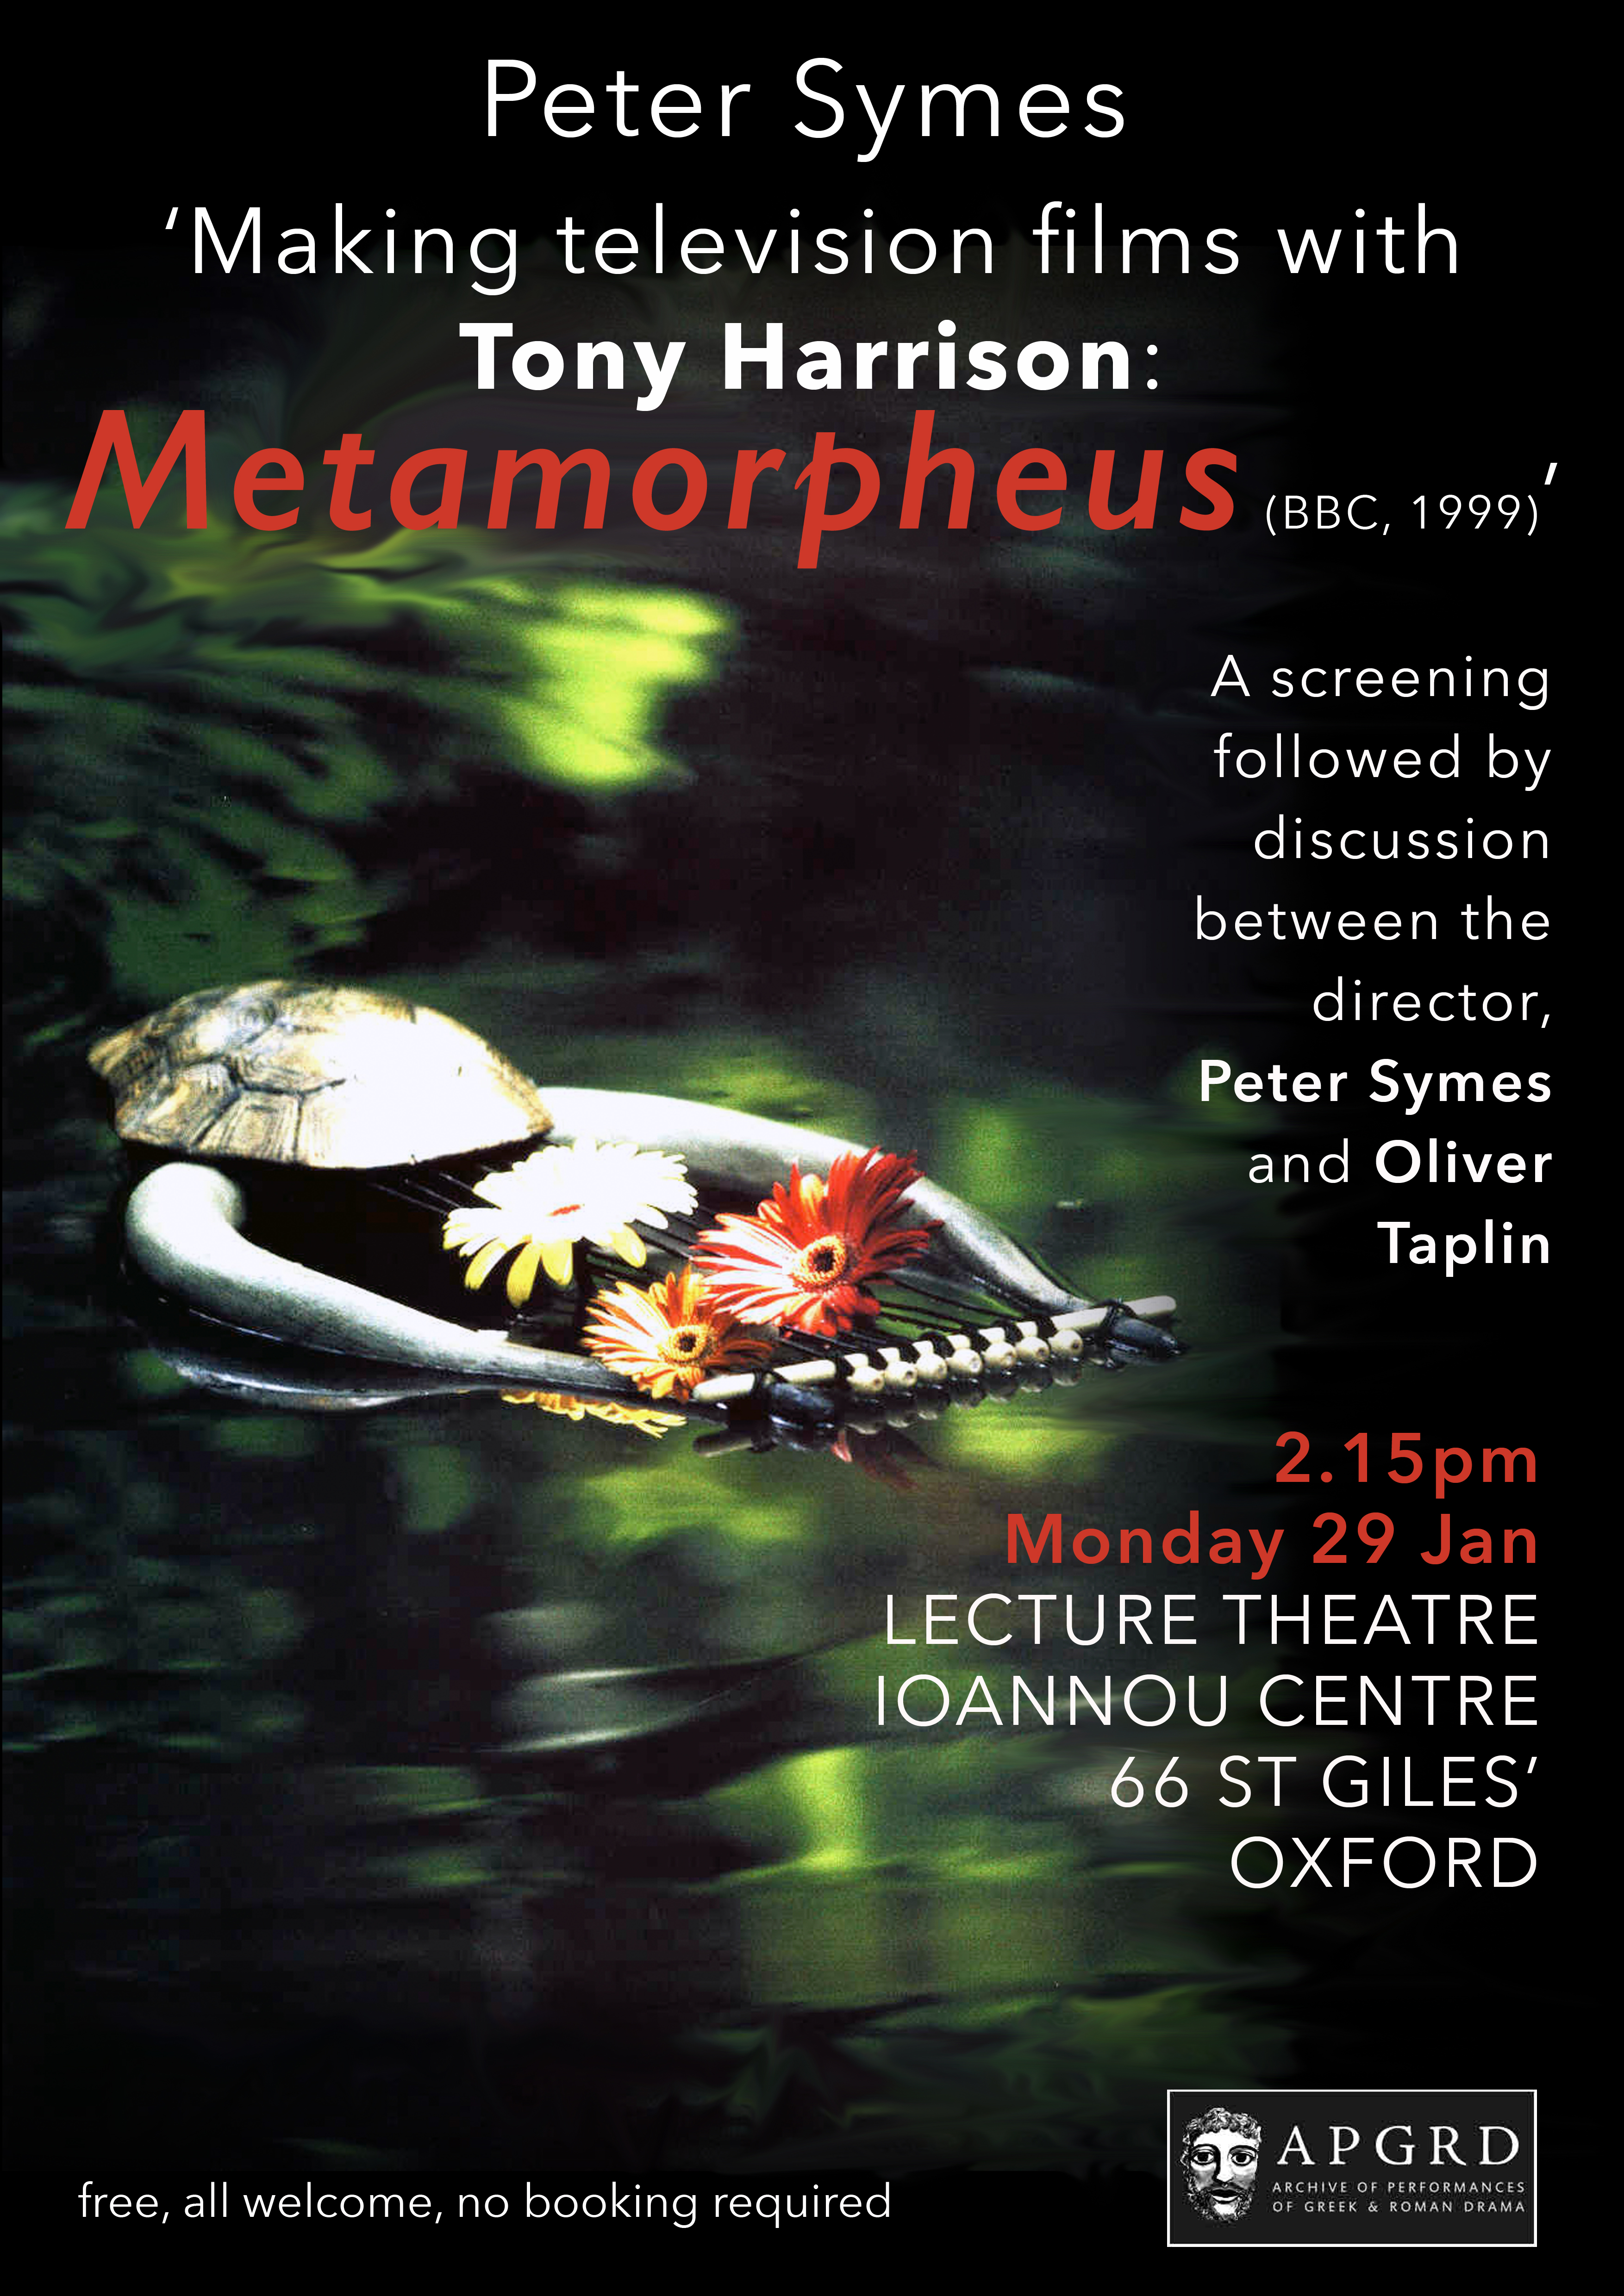 Poster for Metamorpheus event